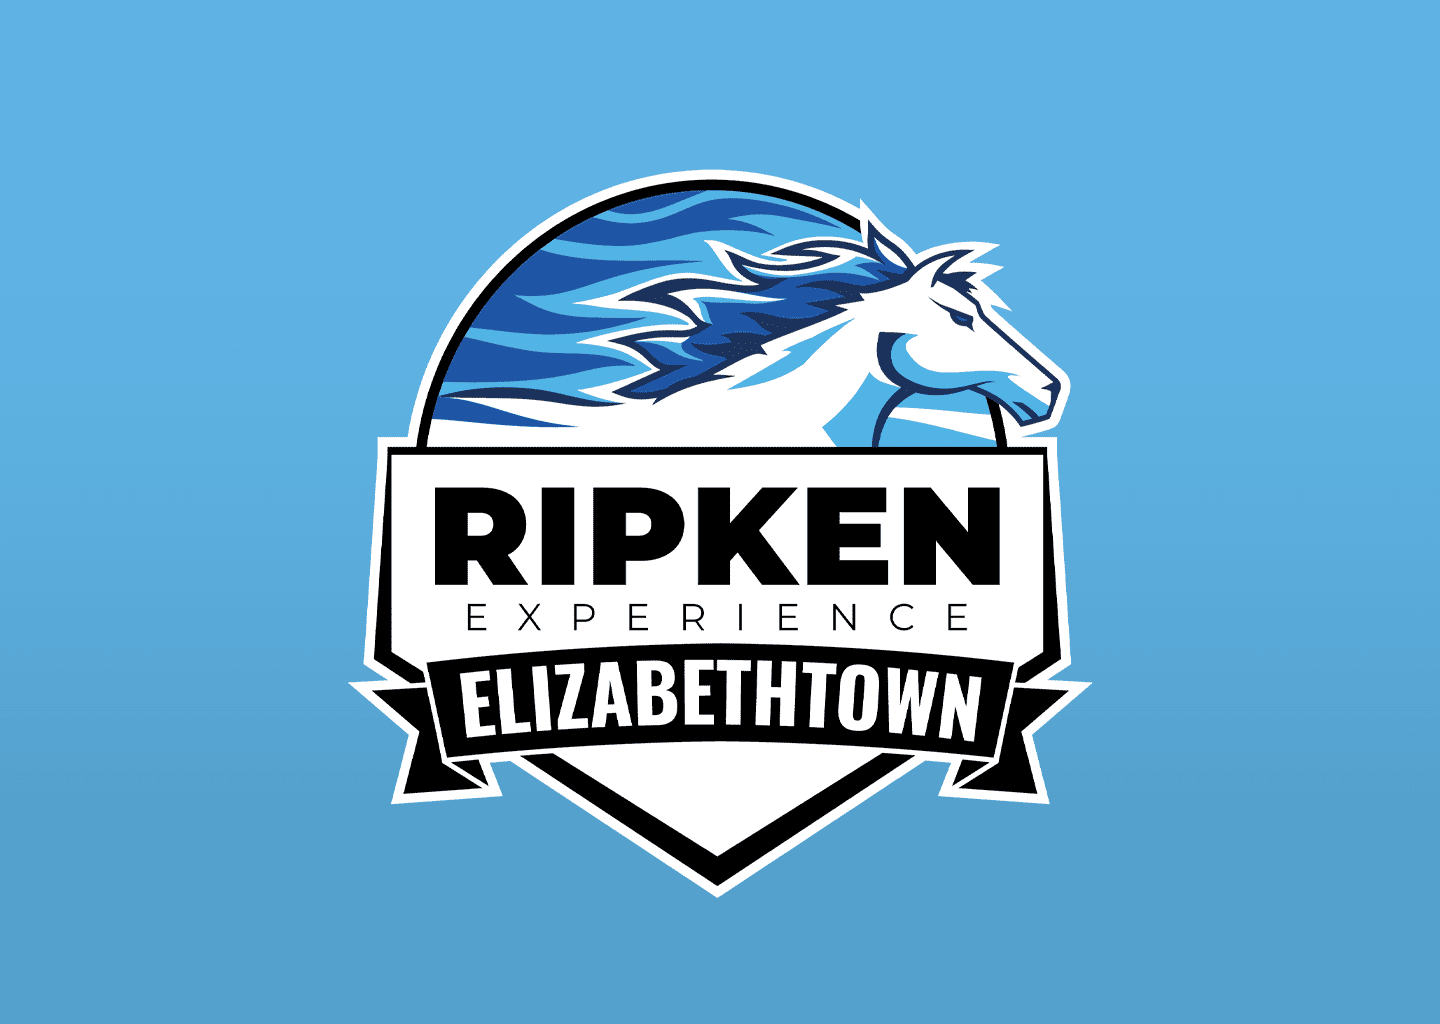 The Ripken Experience Elizabethtown, Kentucky